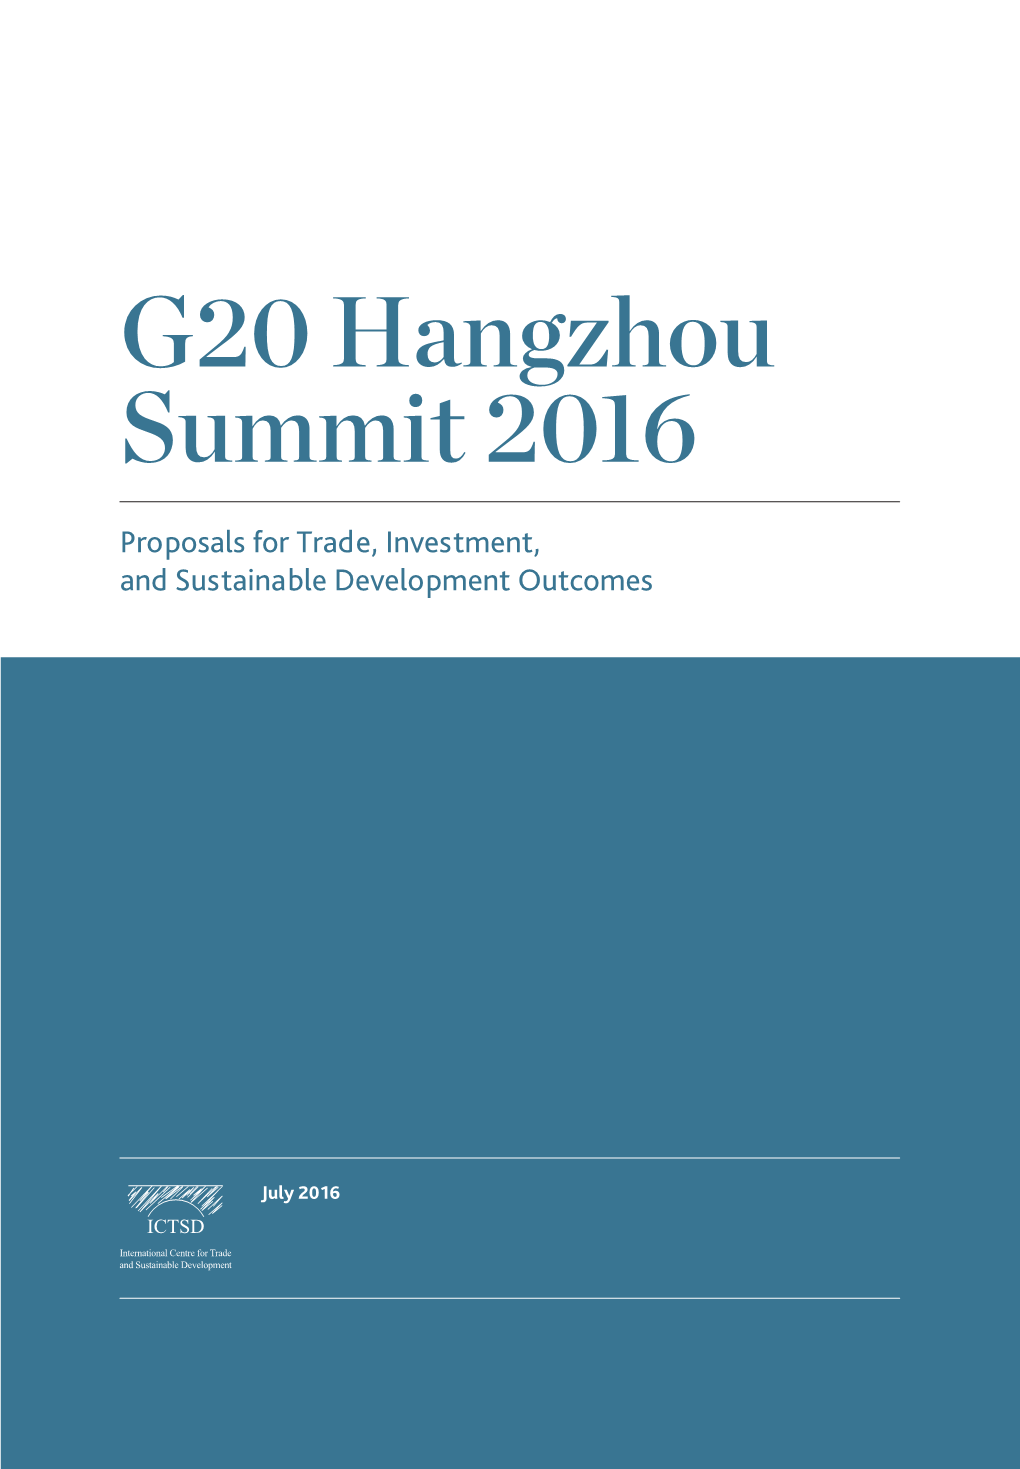 G20 Hangzhou Summit 2016